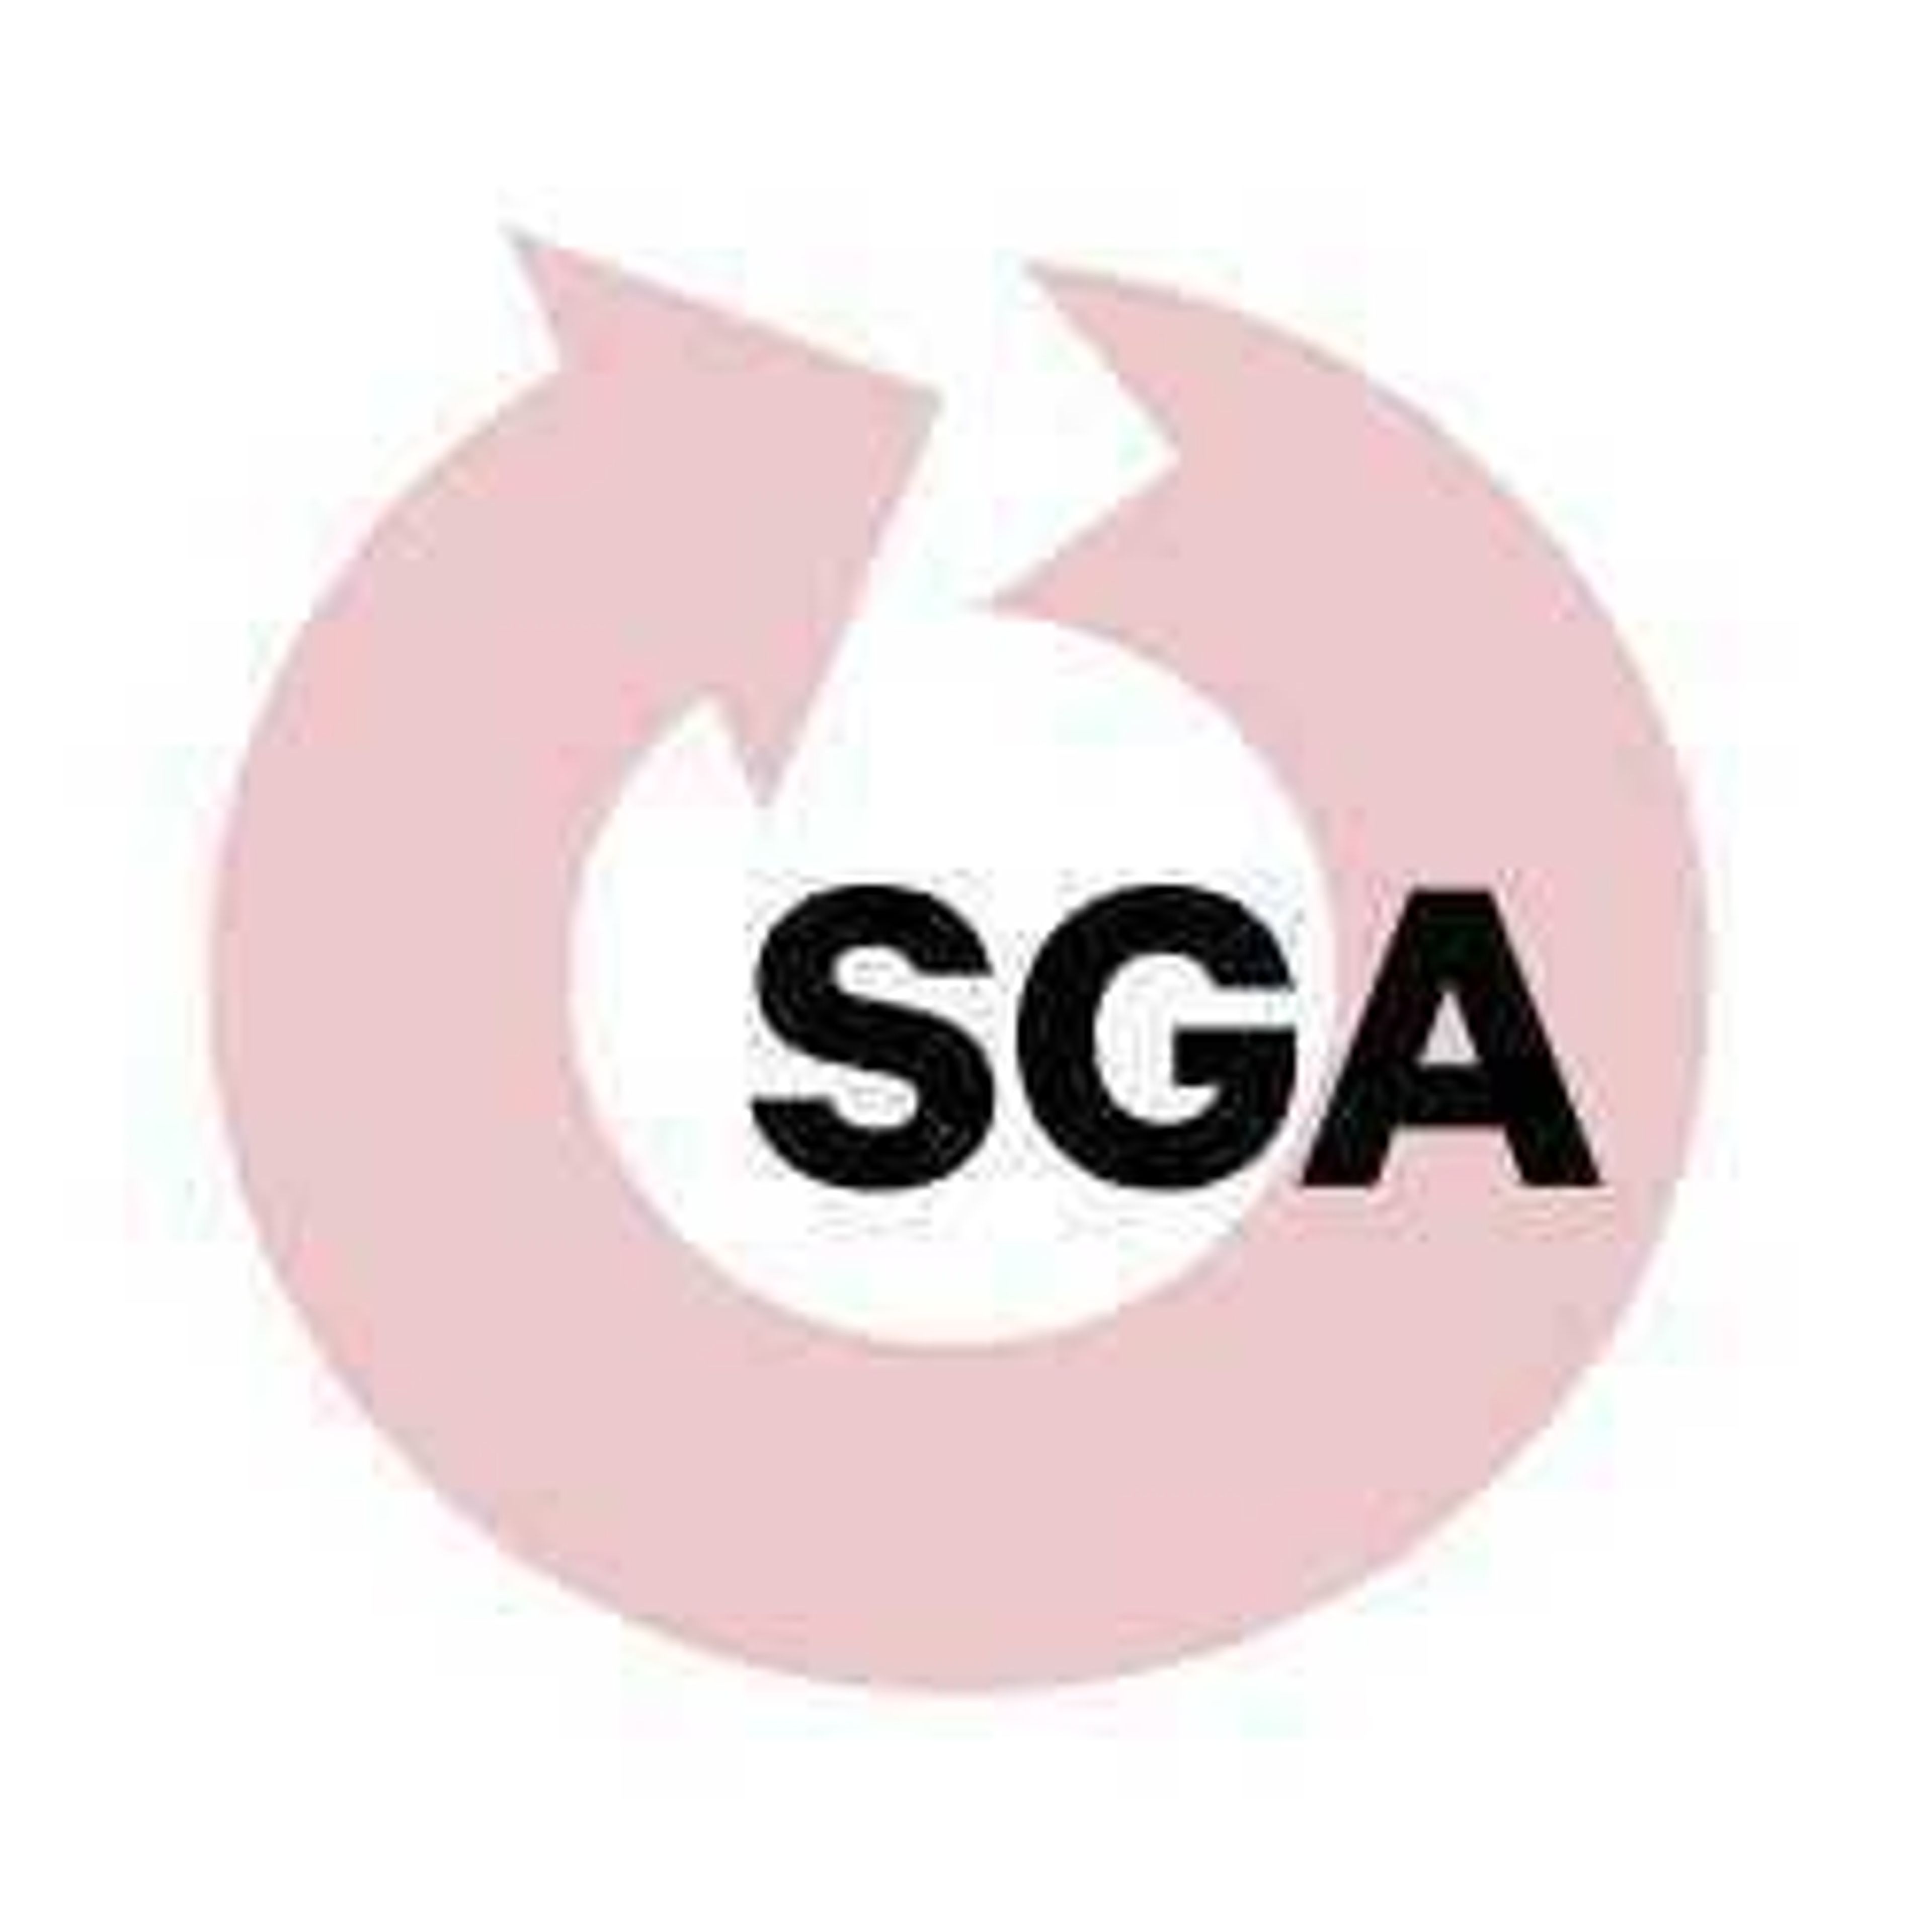 SGA tables Redhawks Against Sexual Assault recognition; five senate vacancies filled